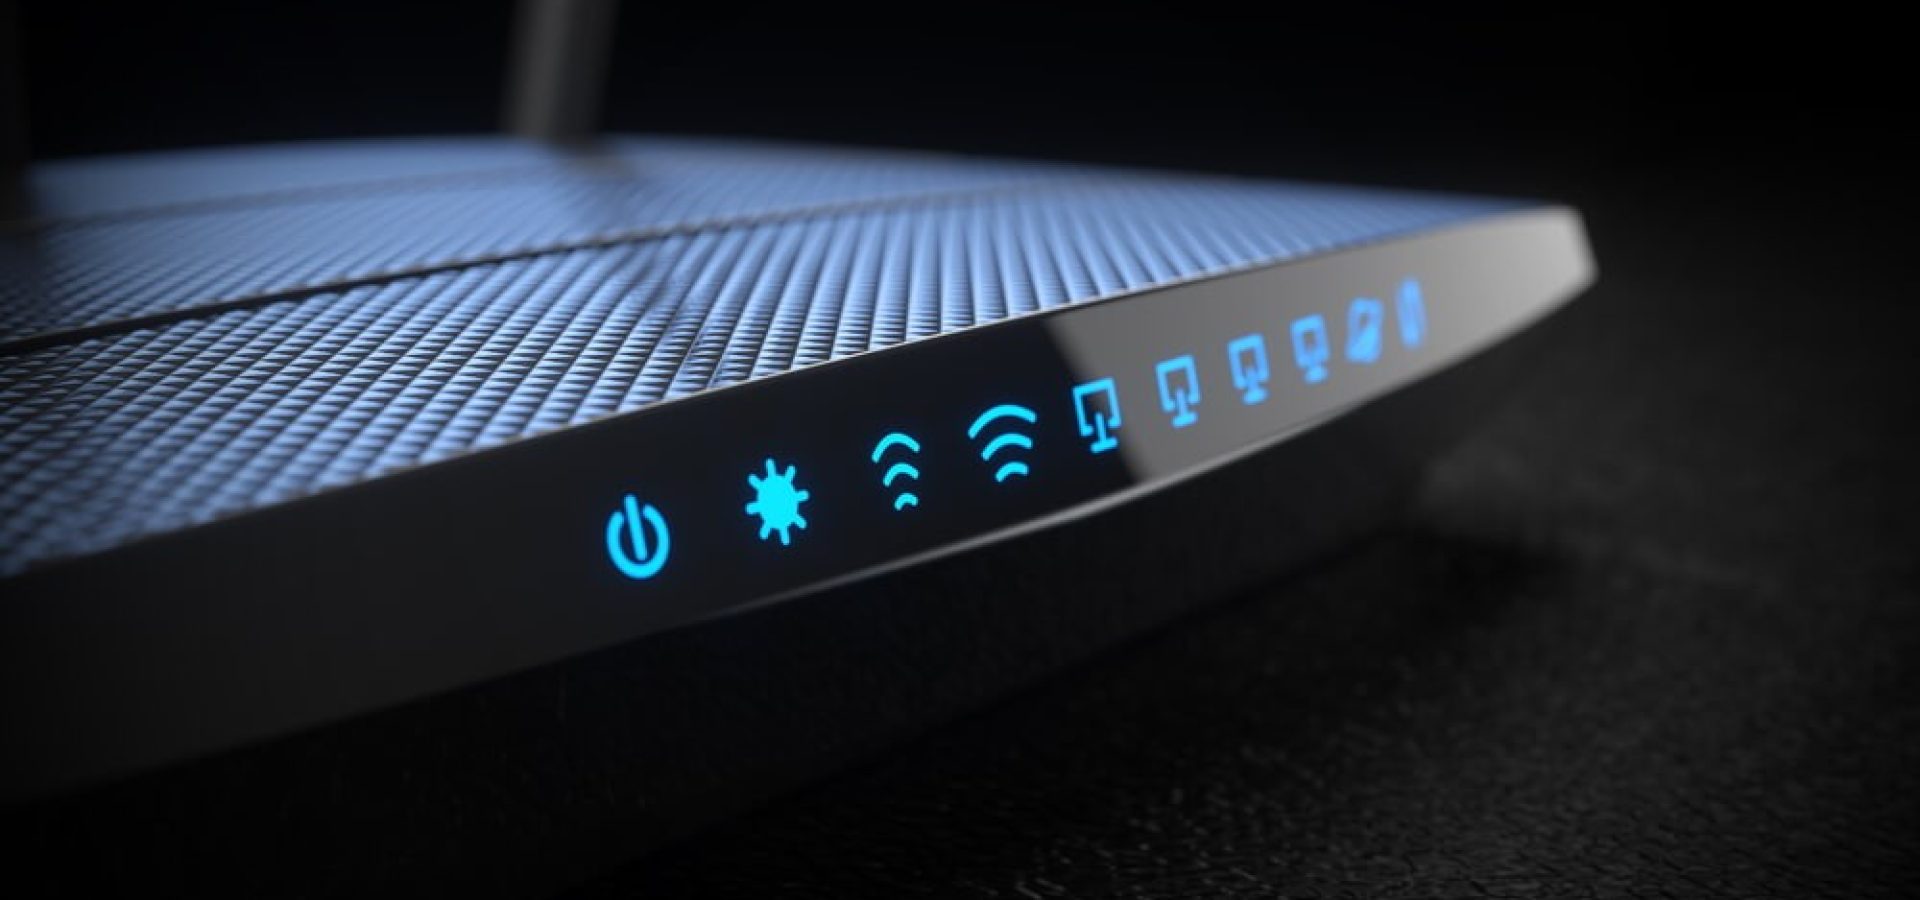 Eero: Wi-Fi wireless internet router on dark background